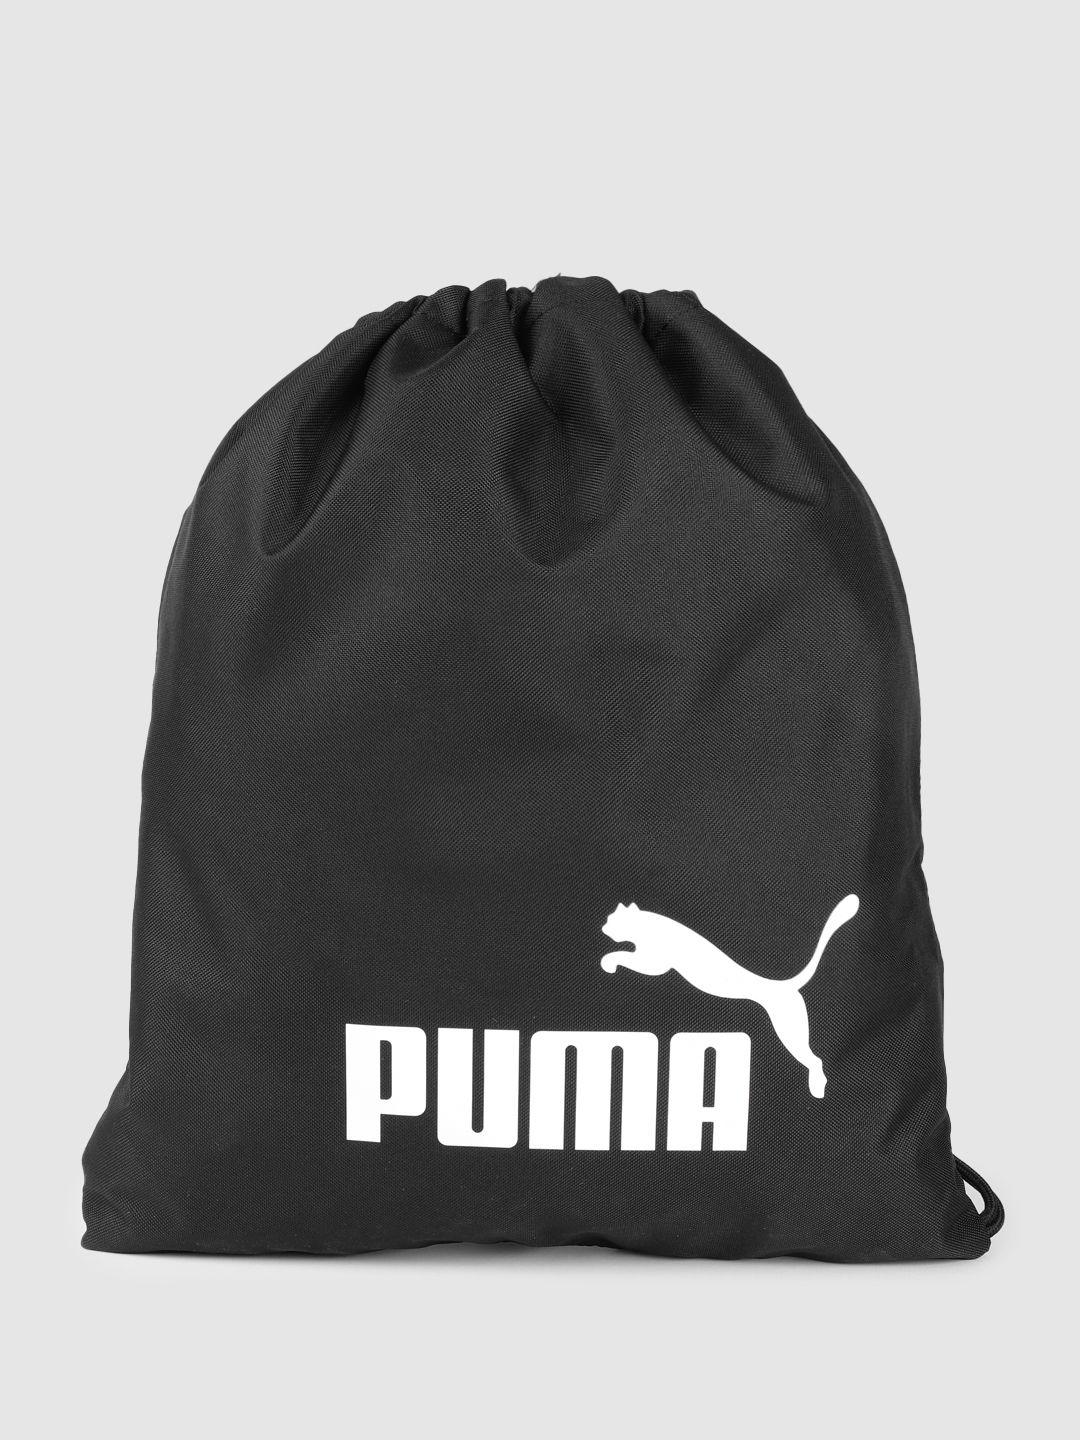 Puma Unisex Brand Logo Printed Gym Sack